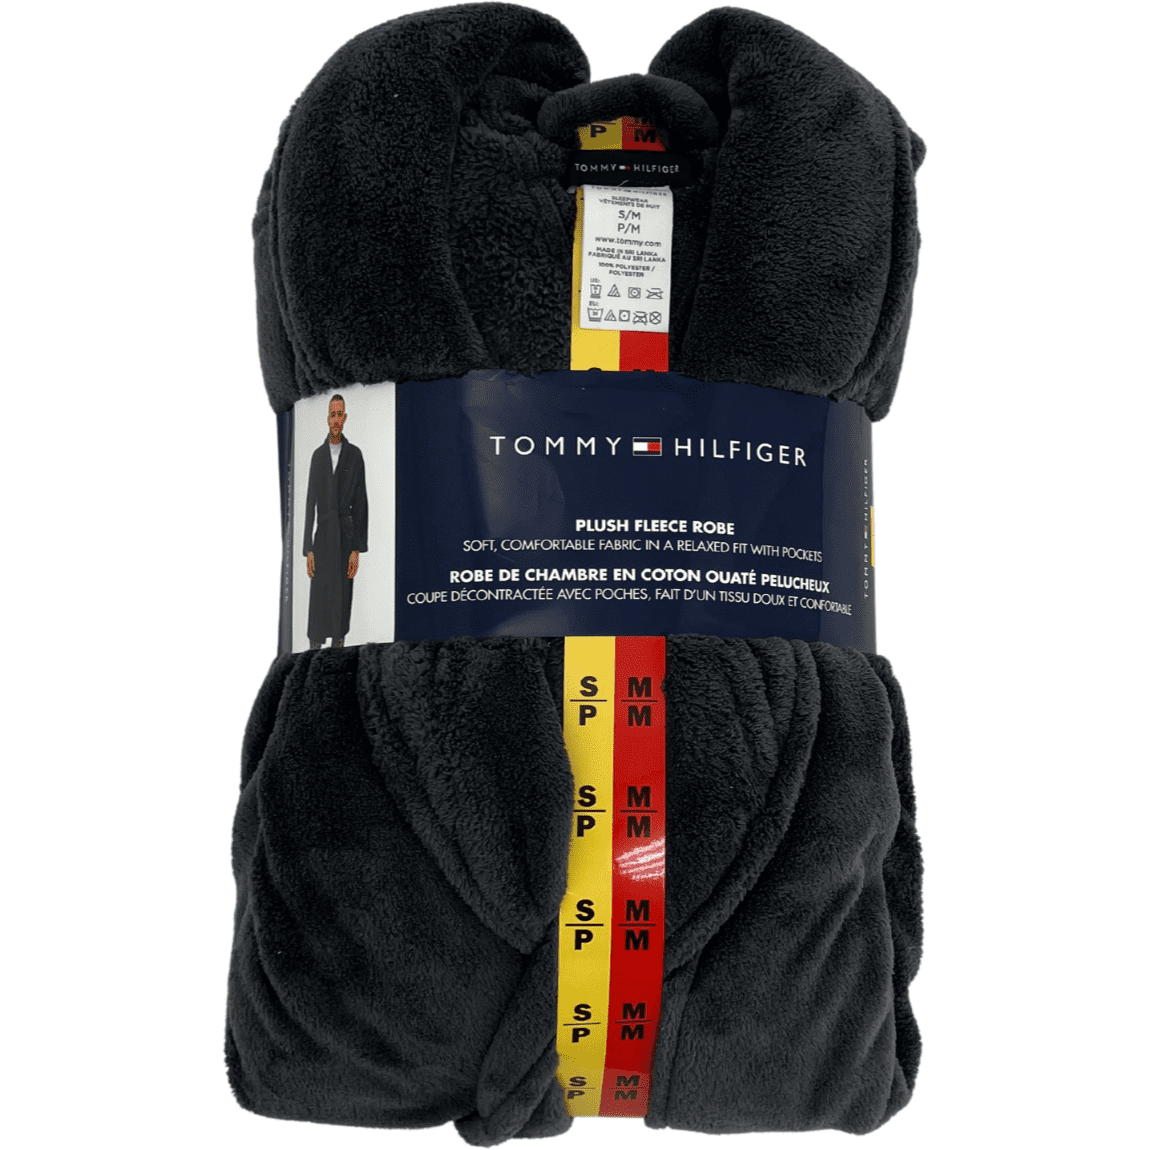 Tommy Hilfiger Men's Plush Fleece Robe / Dark Grey / Various Sizes